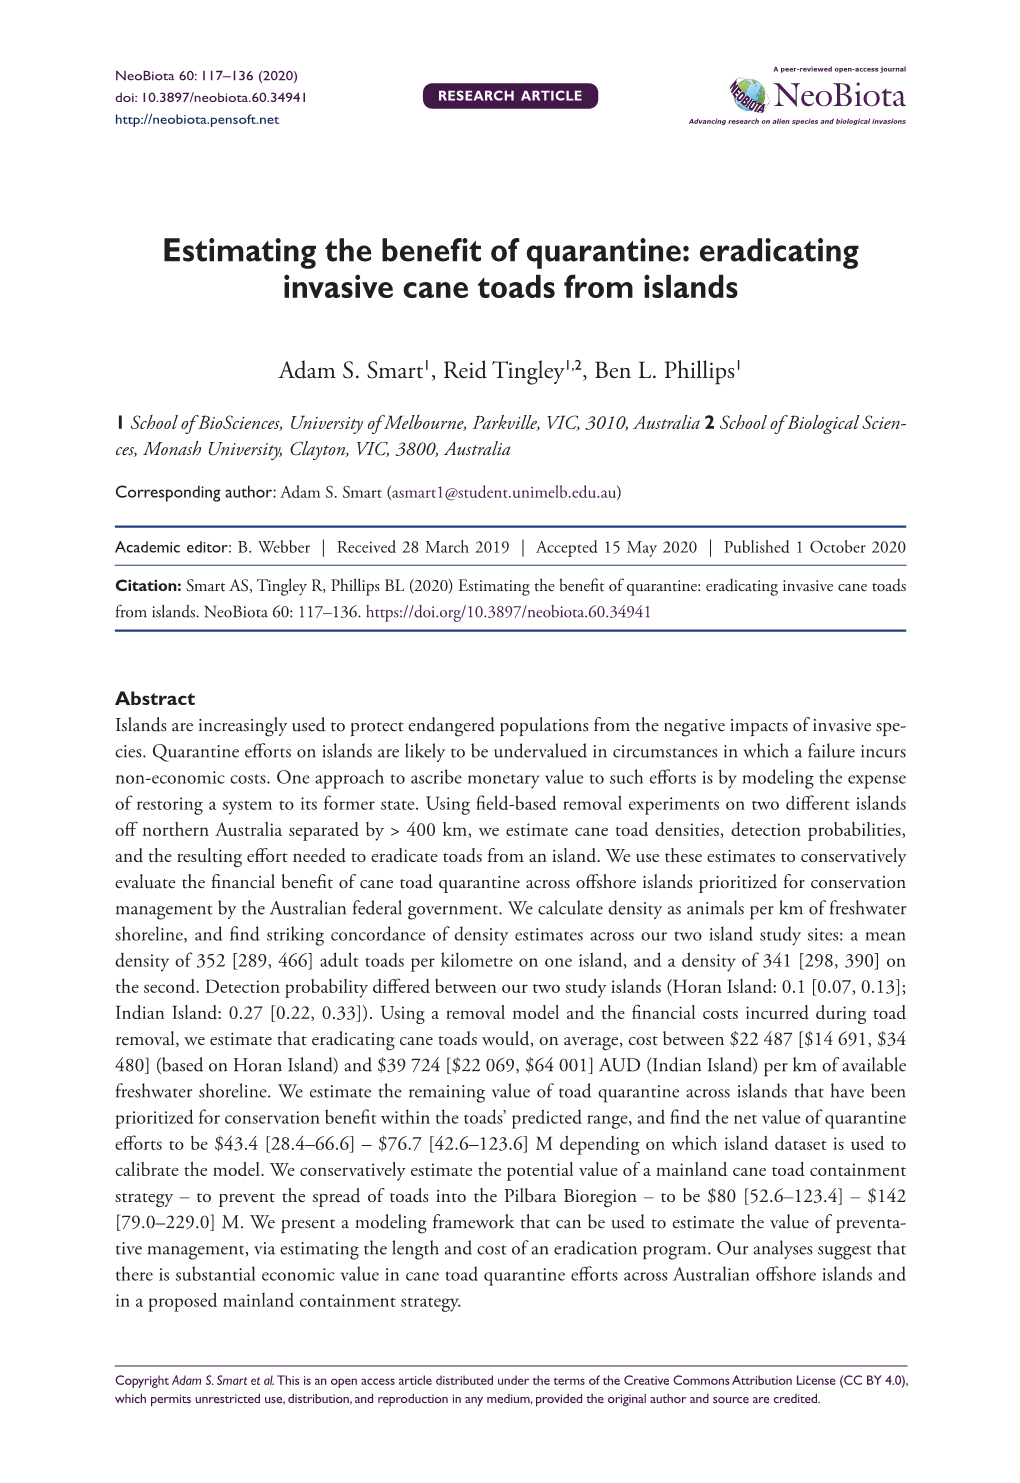 Estimating the Benefit of Quarantine: Eradicating Invasive Cane Toads from Islands